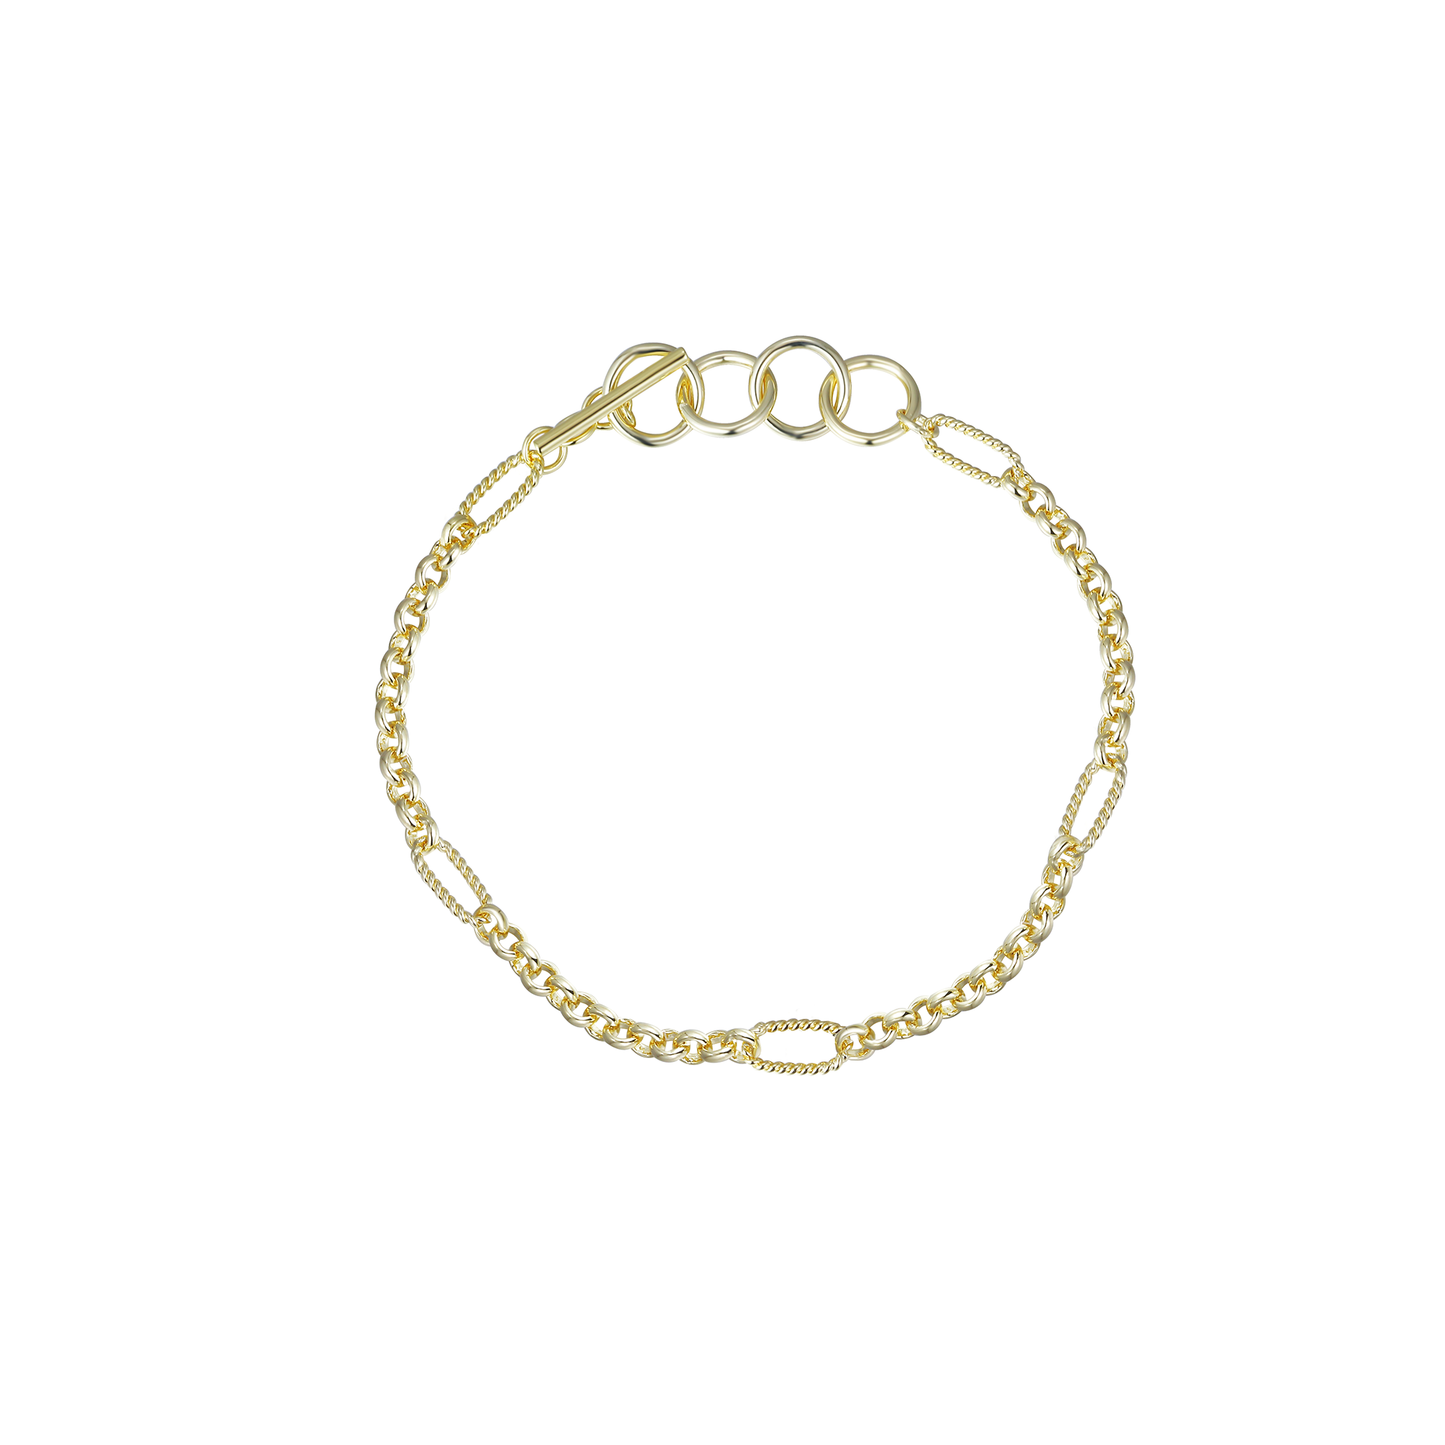 Natalie Wood Designs "Eclipse" Chain Bracelet - Gold